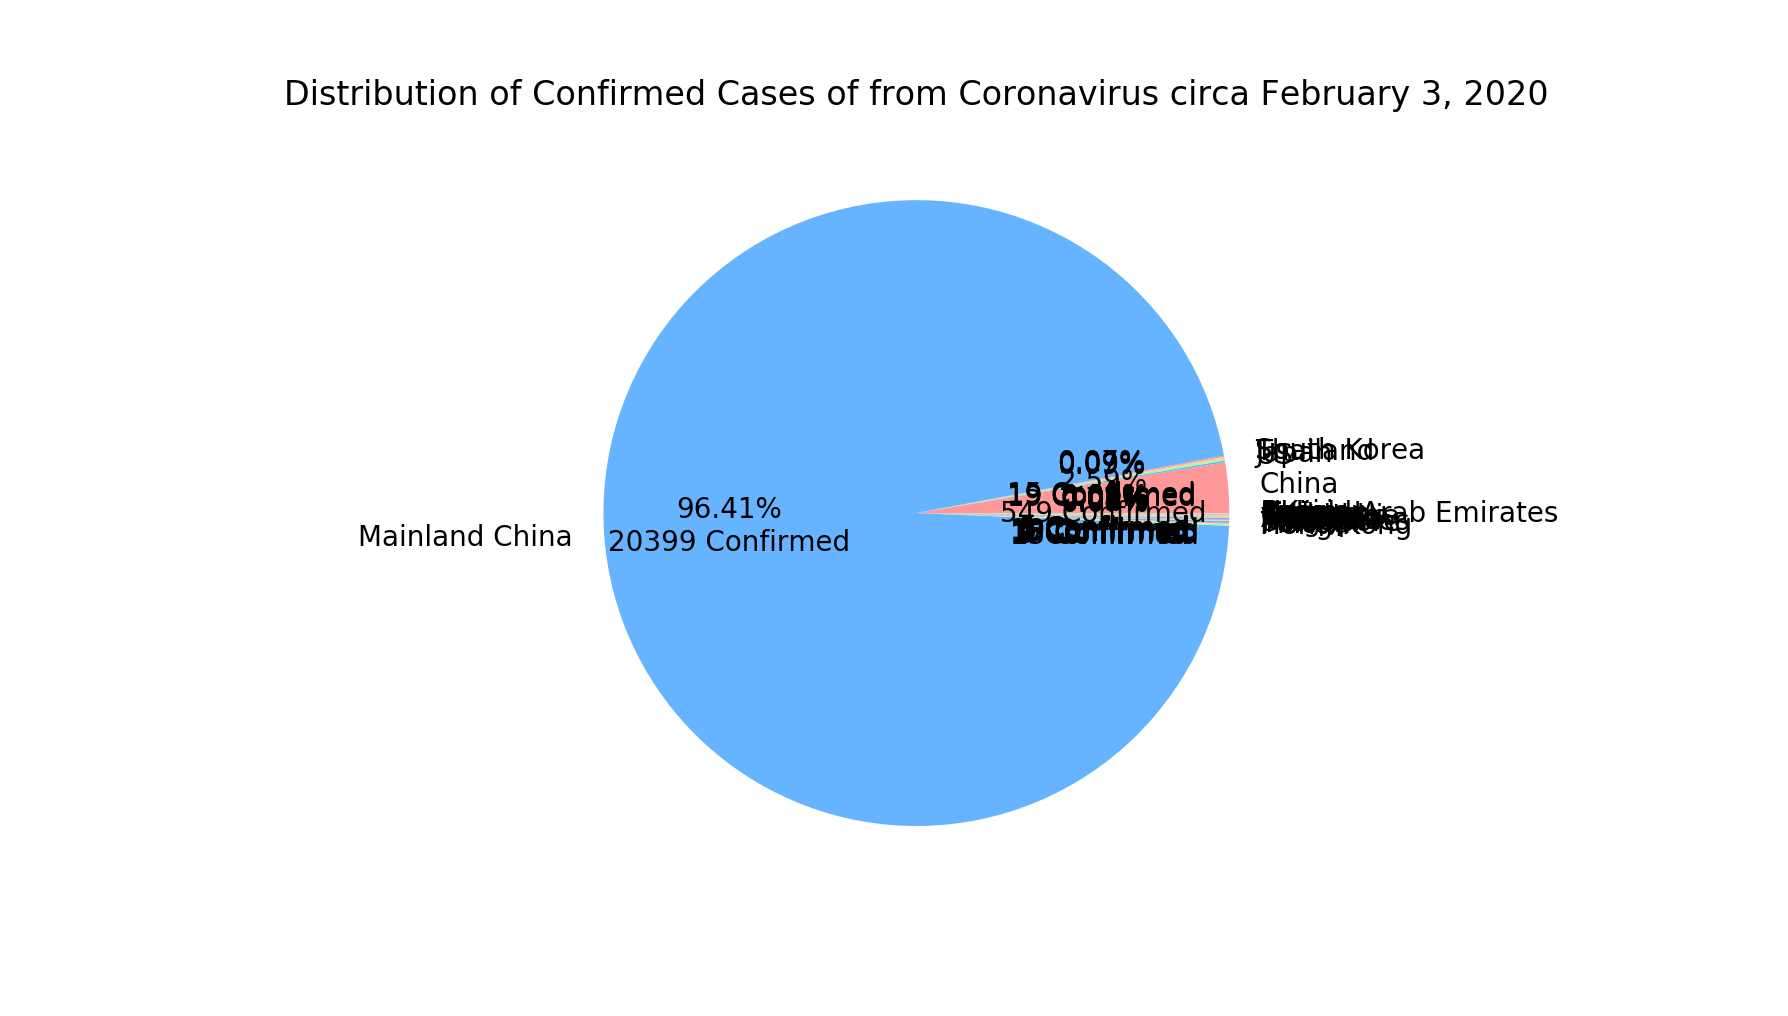 Distribution of Coronavirus Cases